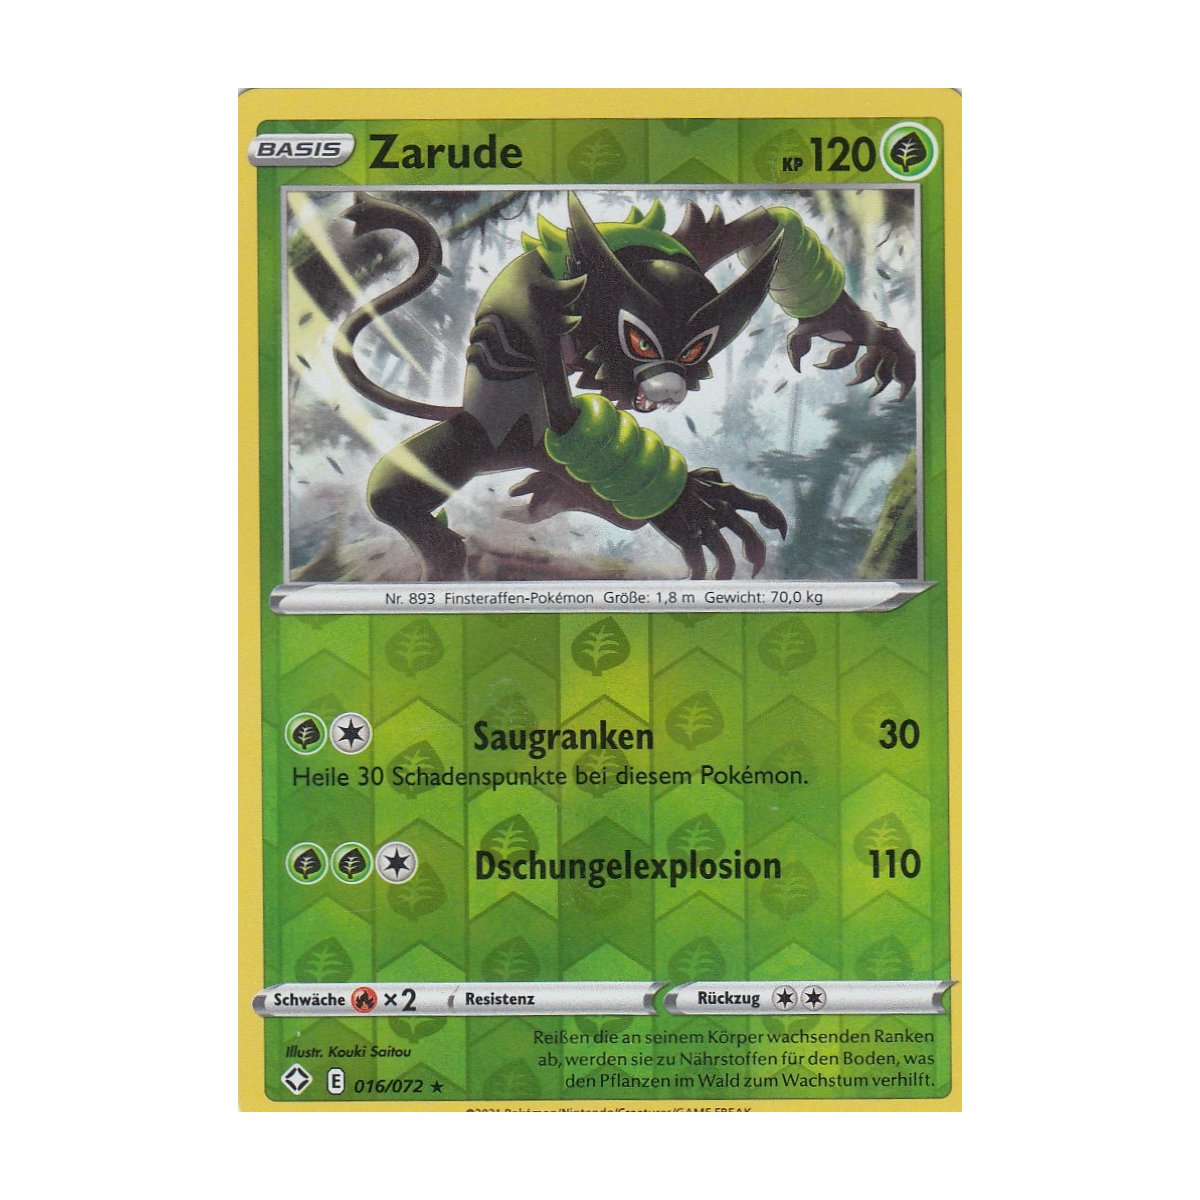 Zarude 016/072 Glänzendes Schicksal Reverse Holo Pokémon Pokemon Karte Mint